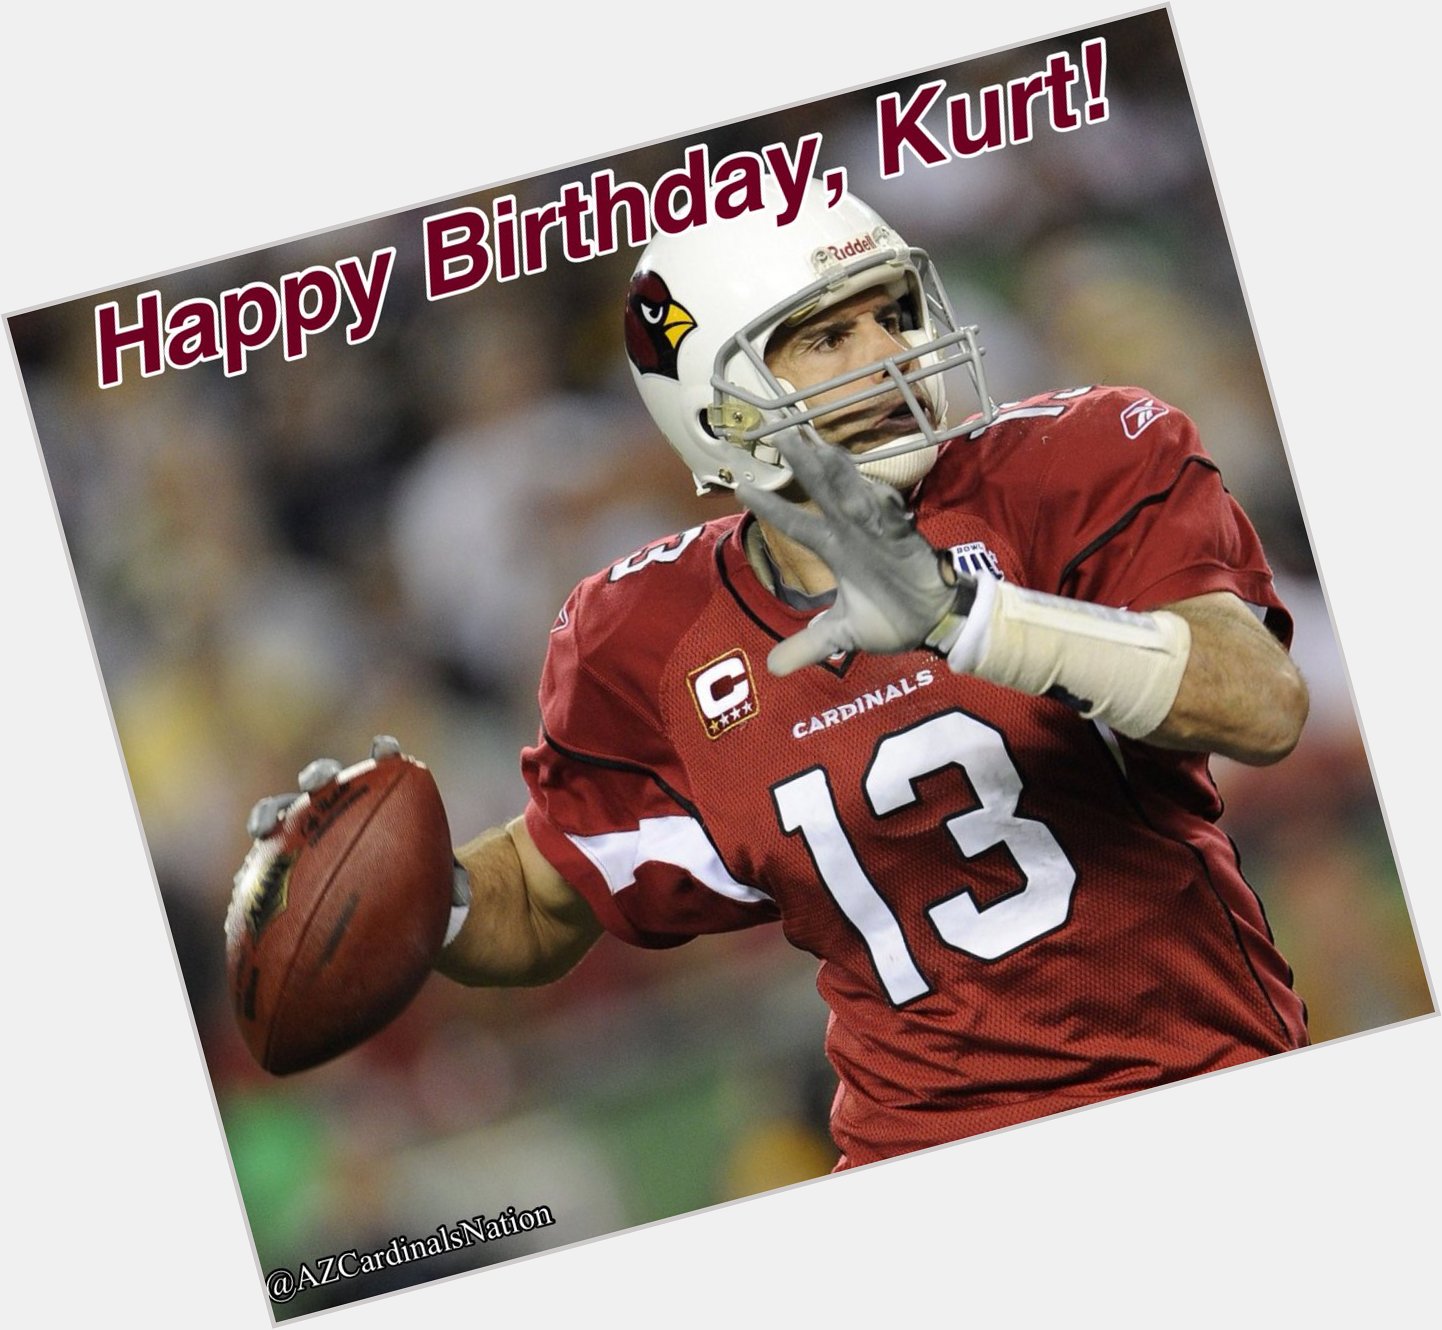 Happy Birthday to legend, Kurt Warner!  